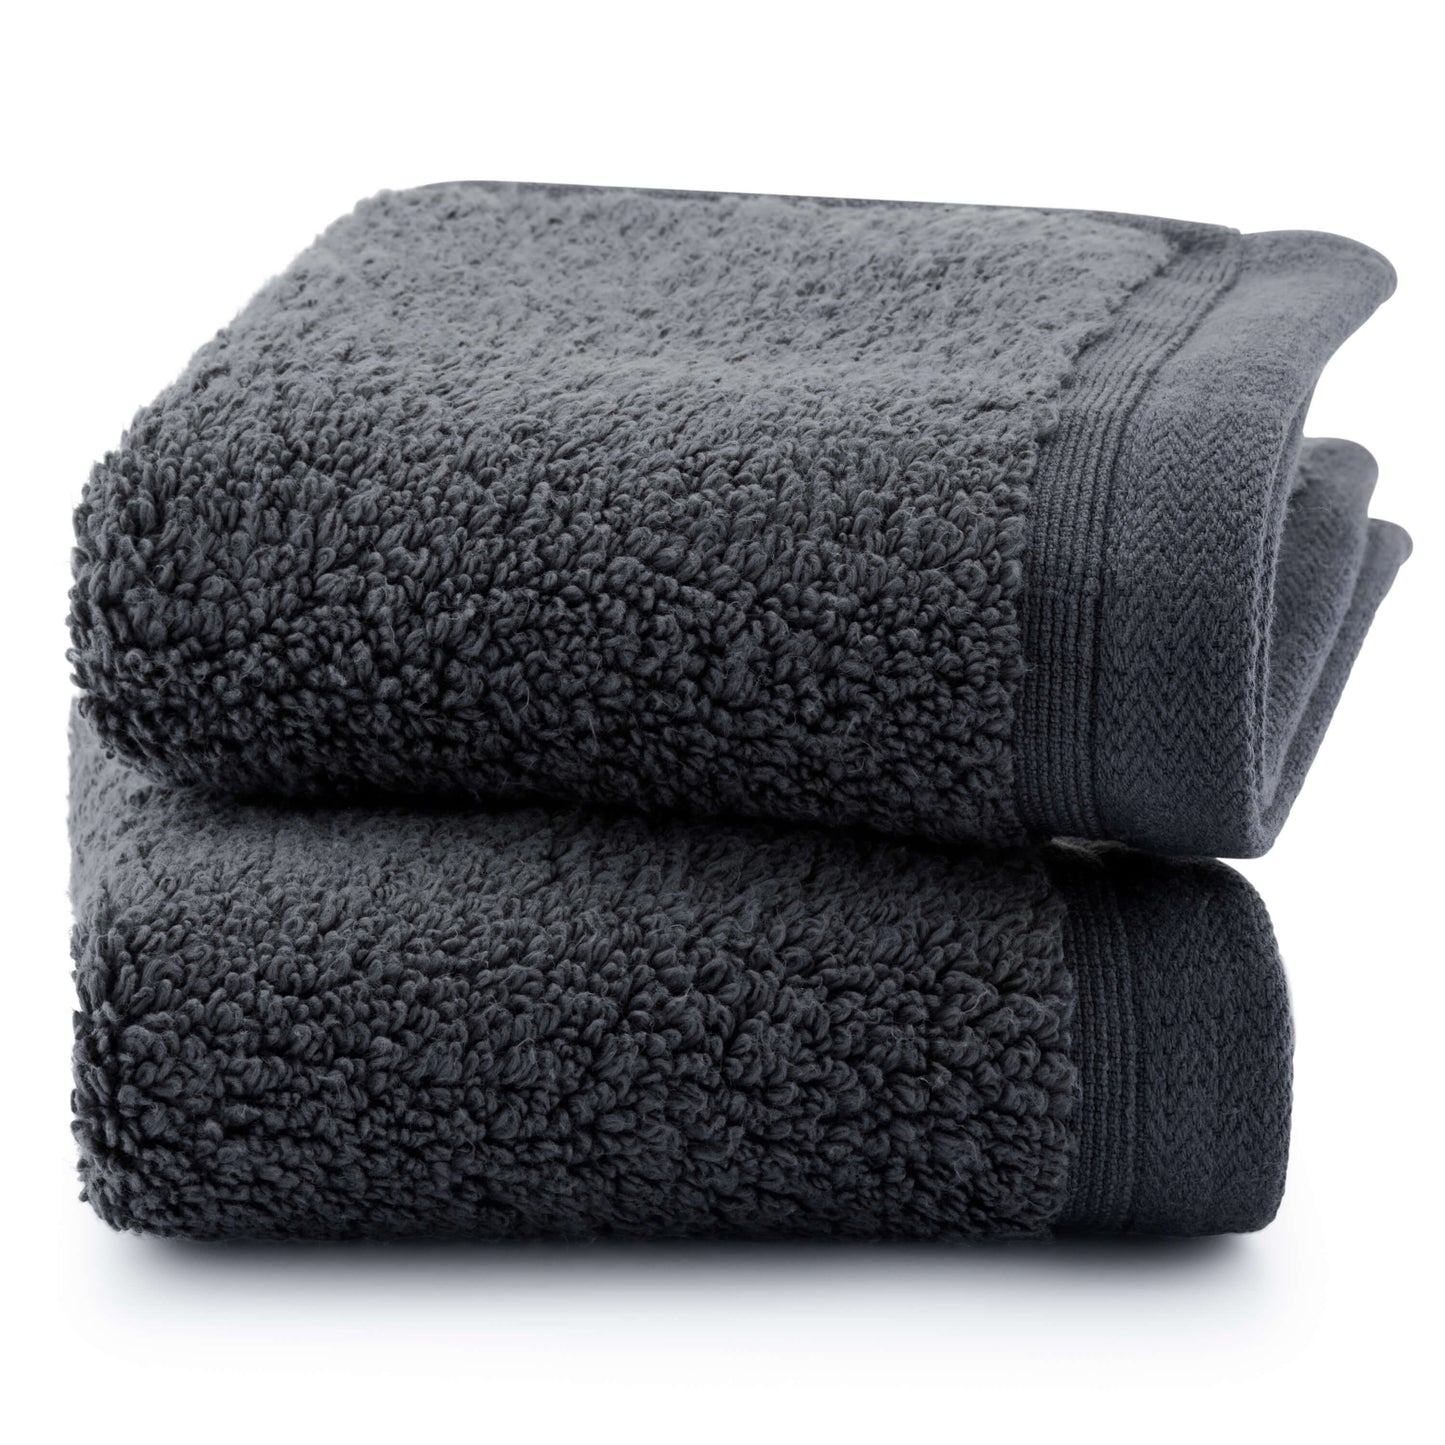 Egyptian Cotton Luxury Serenity Palace Plush Towels - Grey - 700GSM Zero Twist